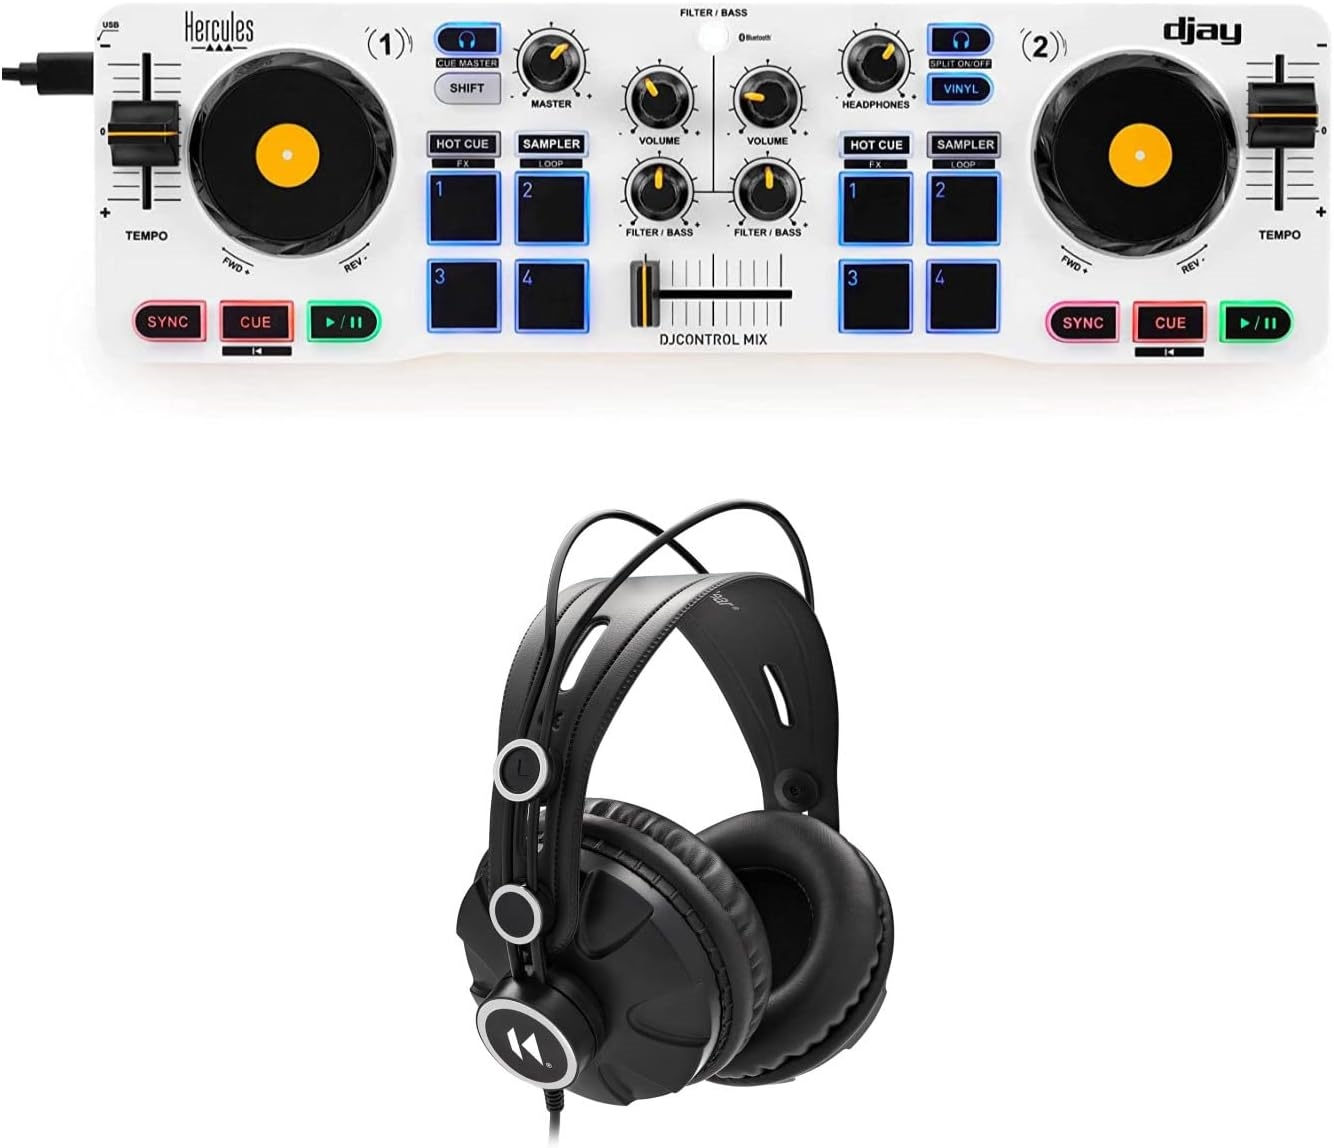 Hercules Bluetooth DJ Controller | DeviceDaily.com